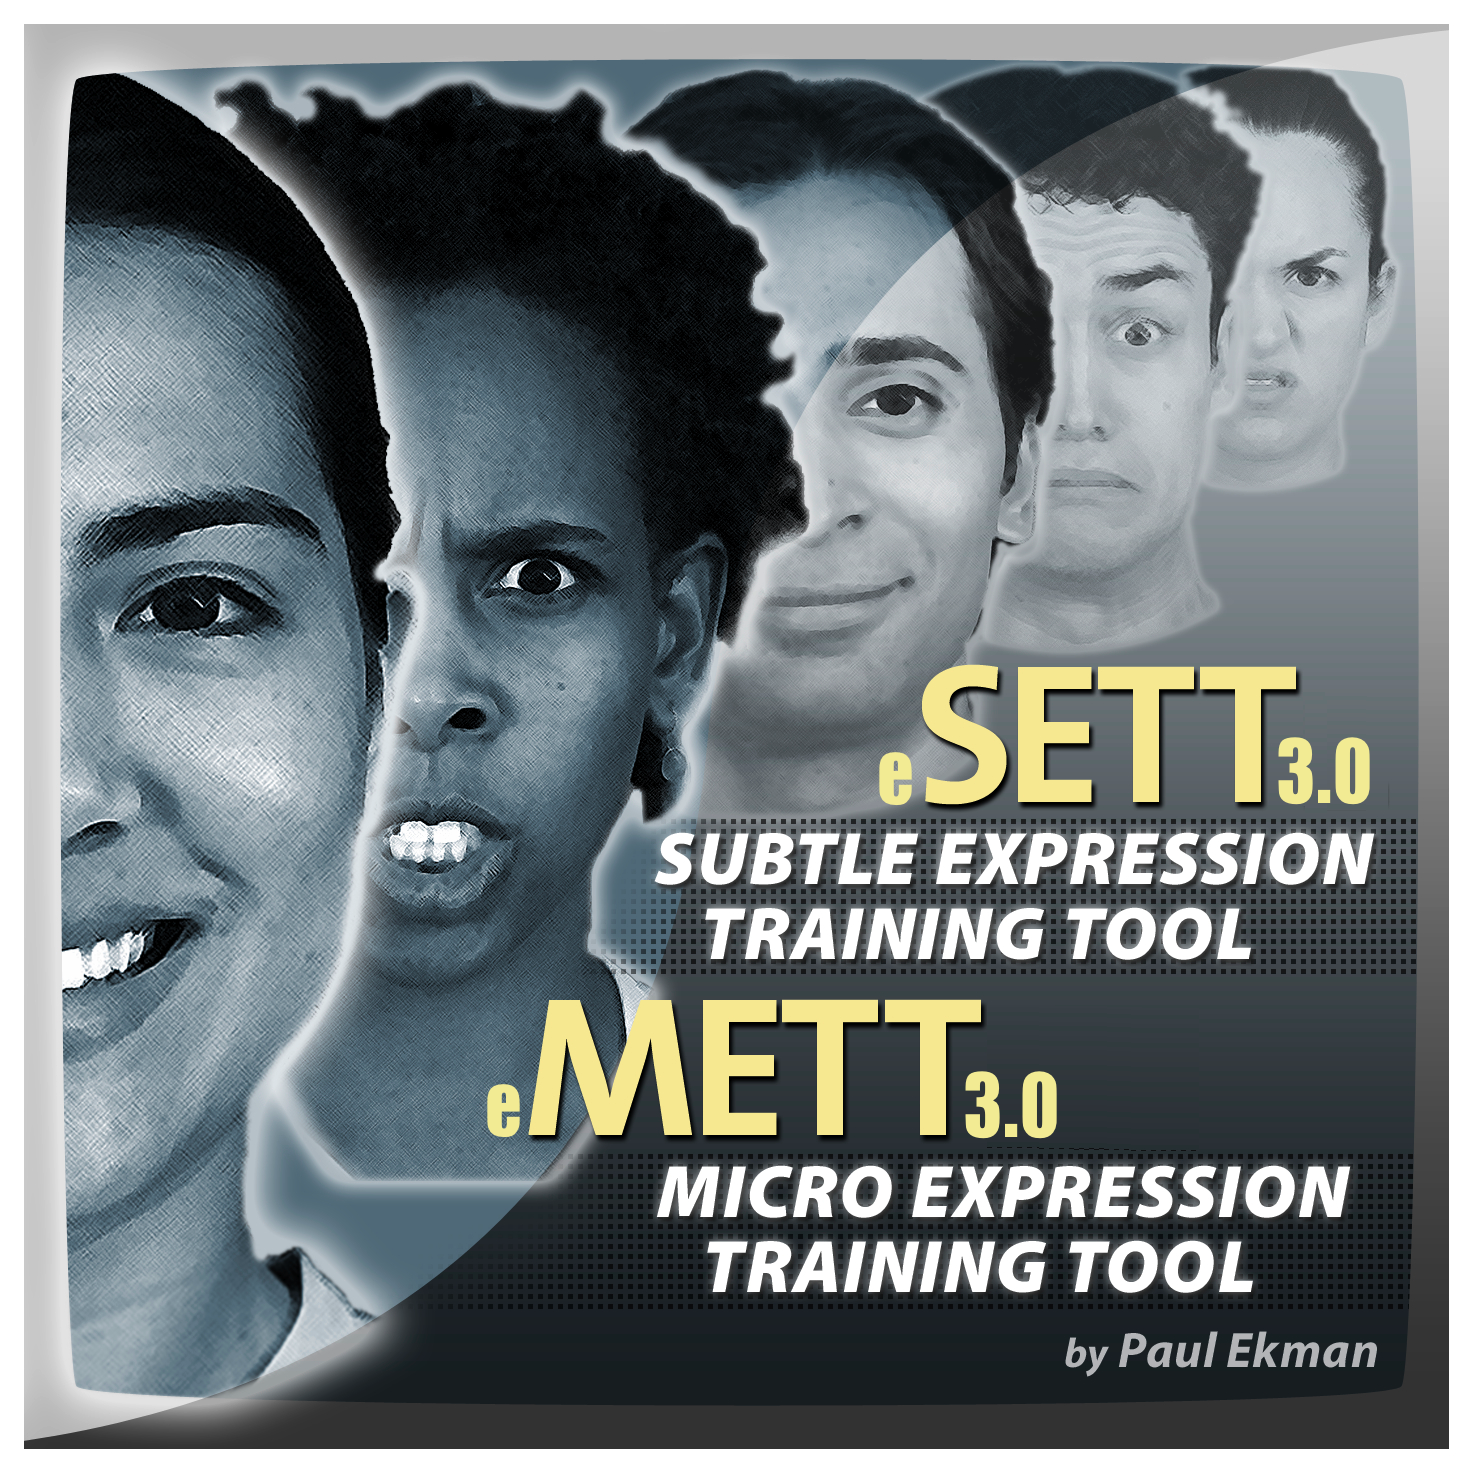 micro expression training tool mett by paul ekman